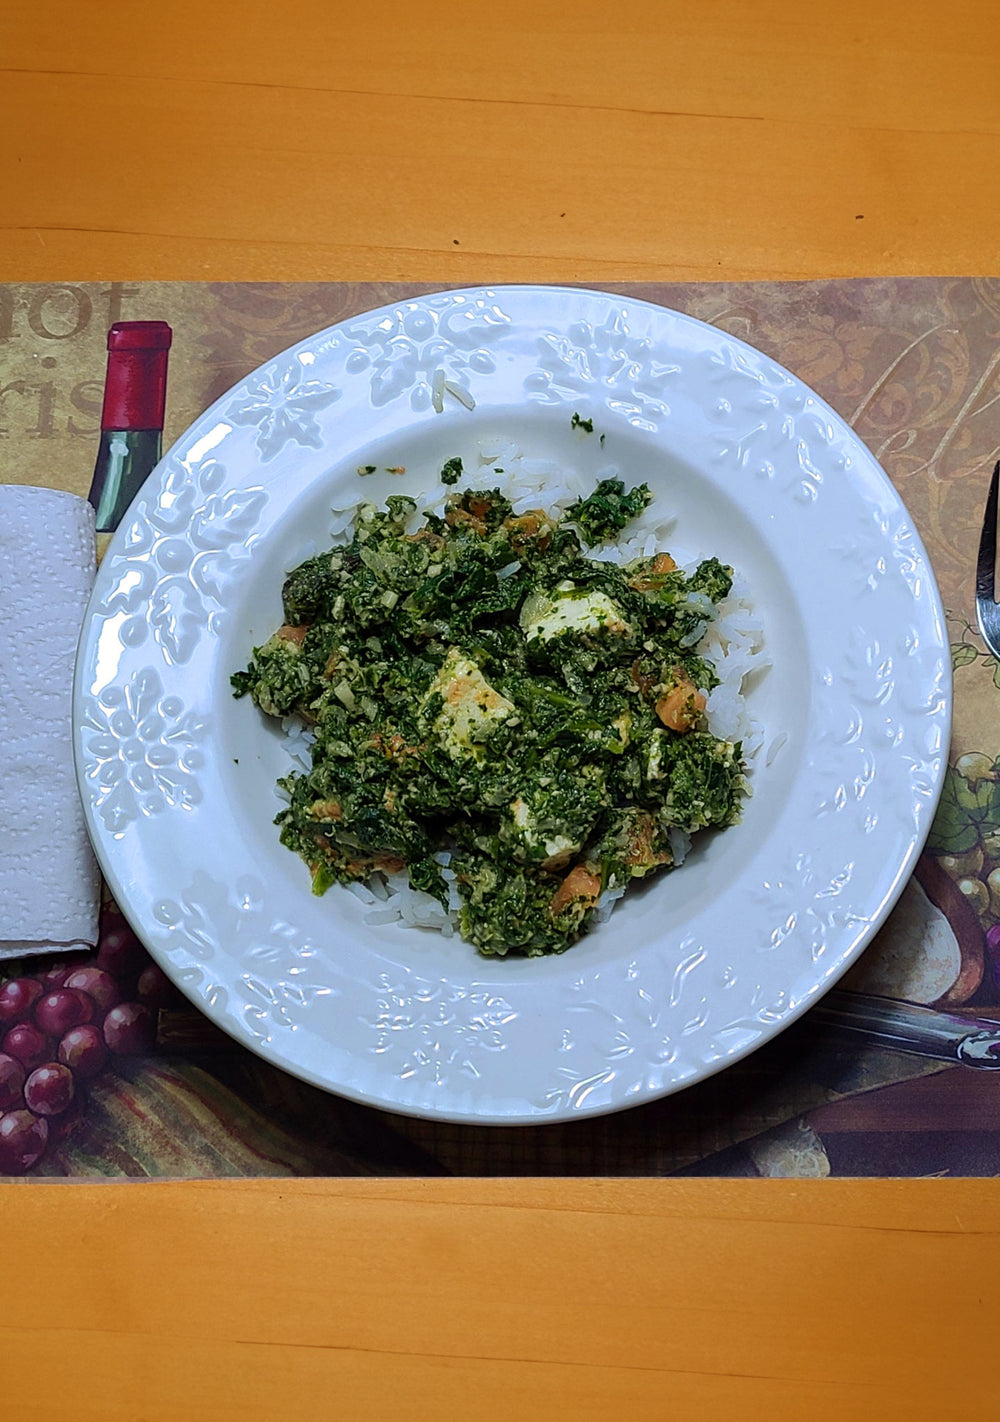 Judy prepared Simply Masala Sag Paneer, spinach with cheese and tofu 